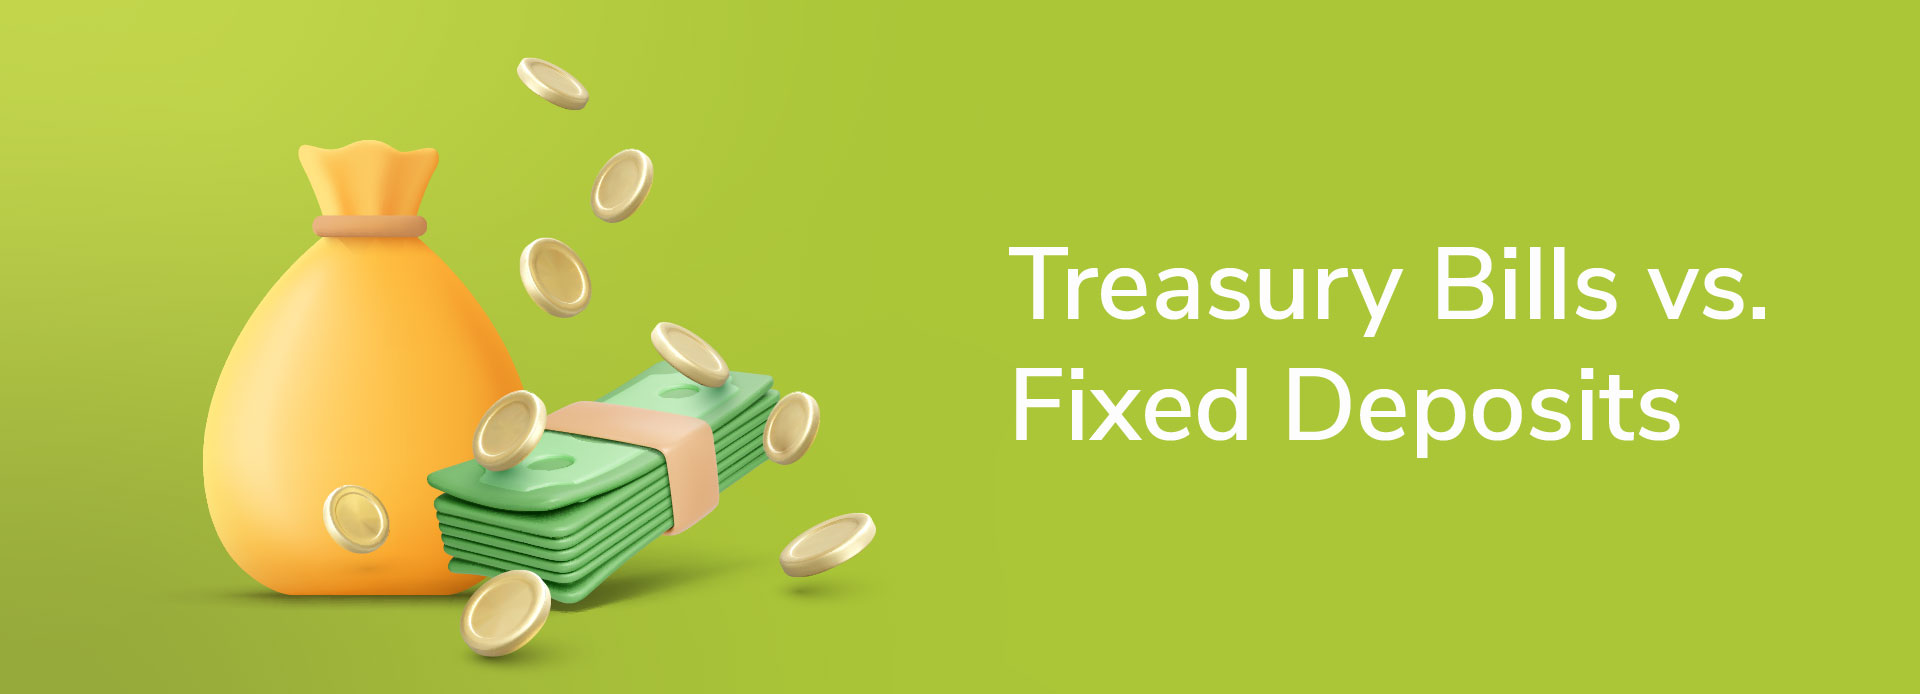 Treasury Bills vs Fixed Deposits